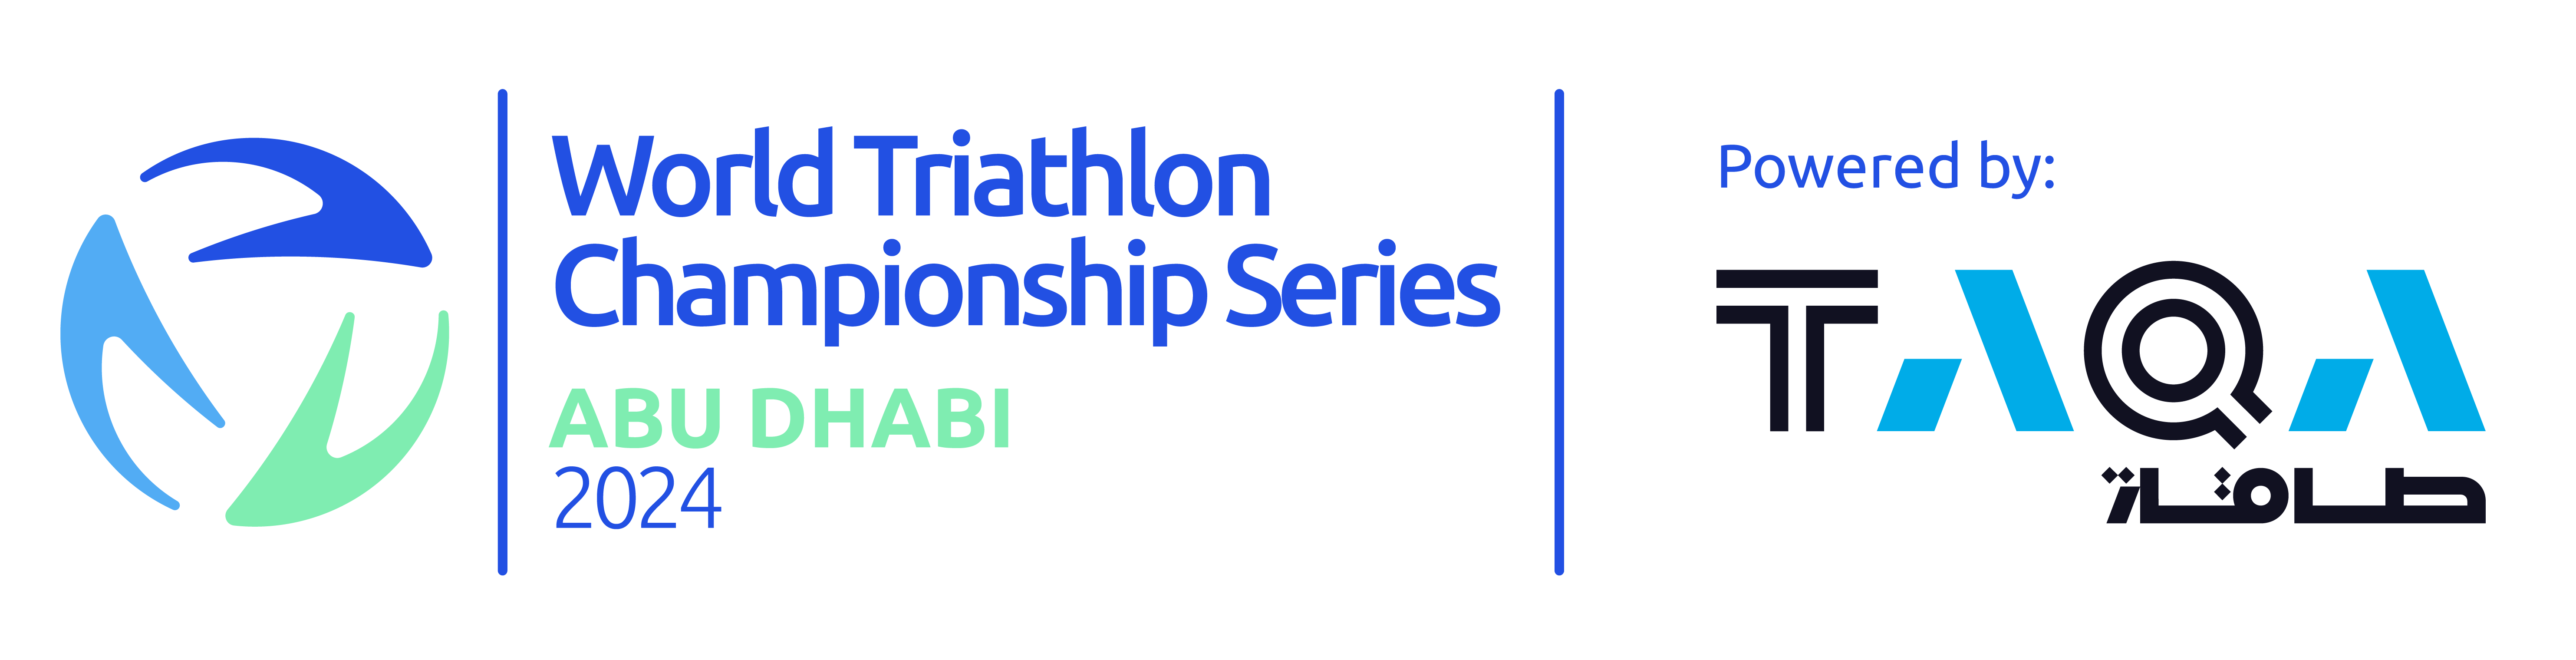 2024 World Triathlon Championship Series Abu Dhabi logo